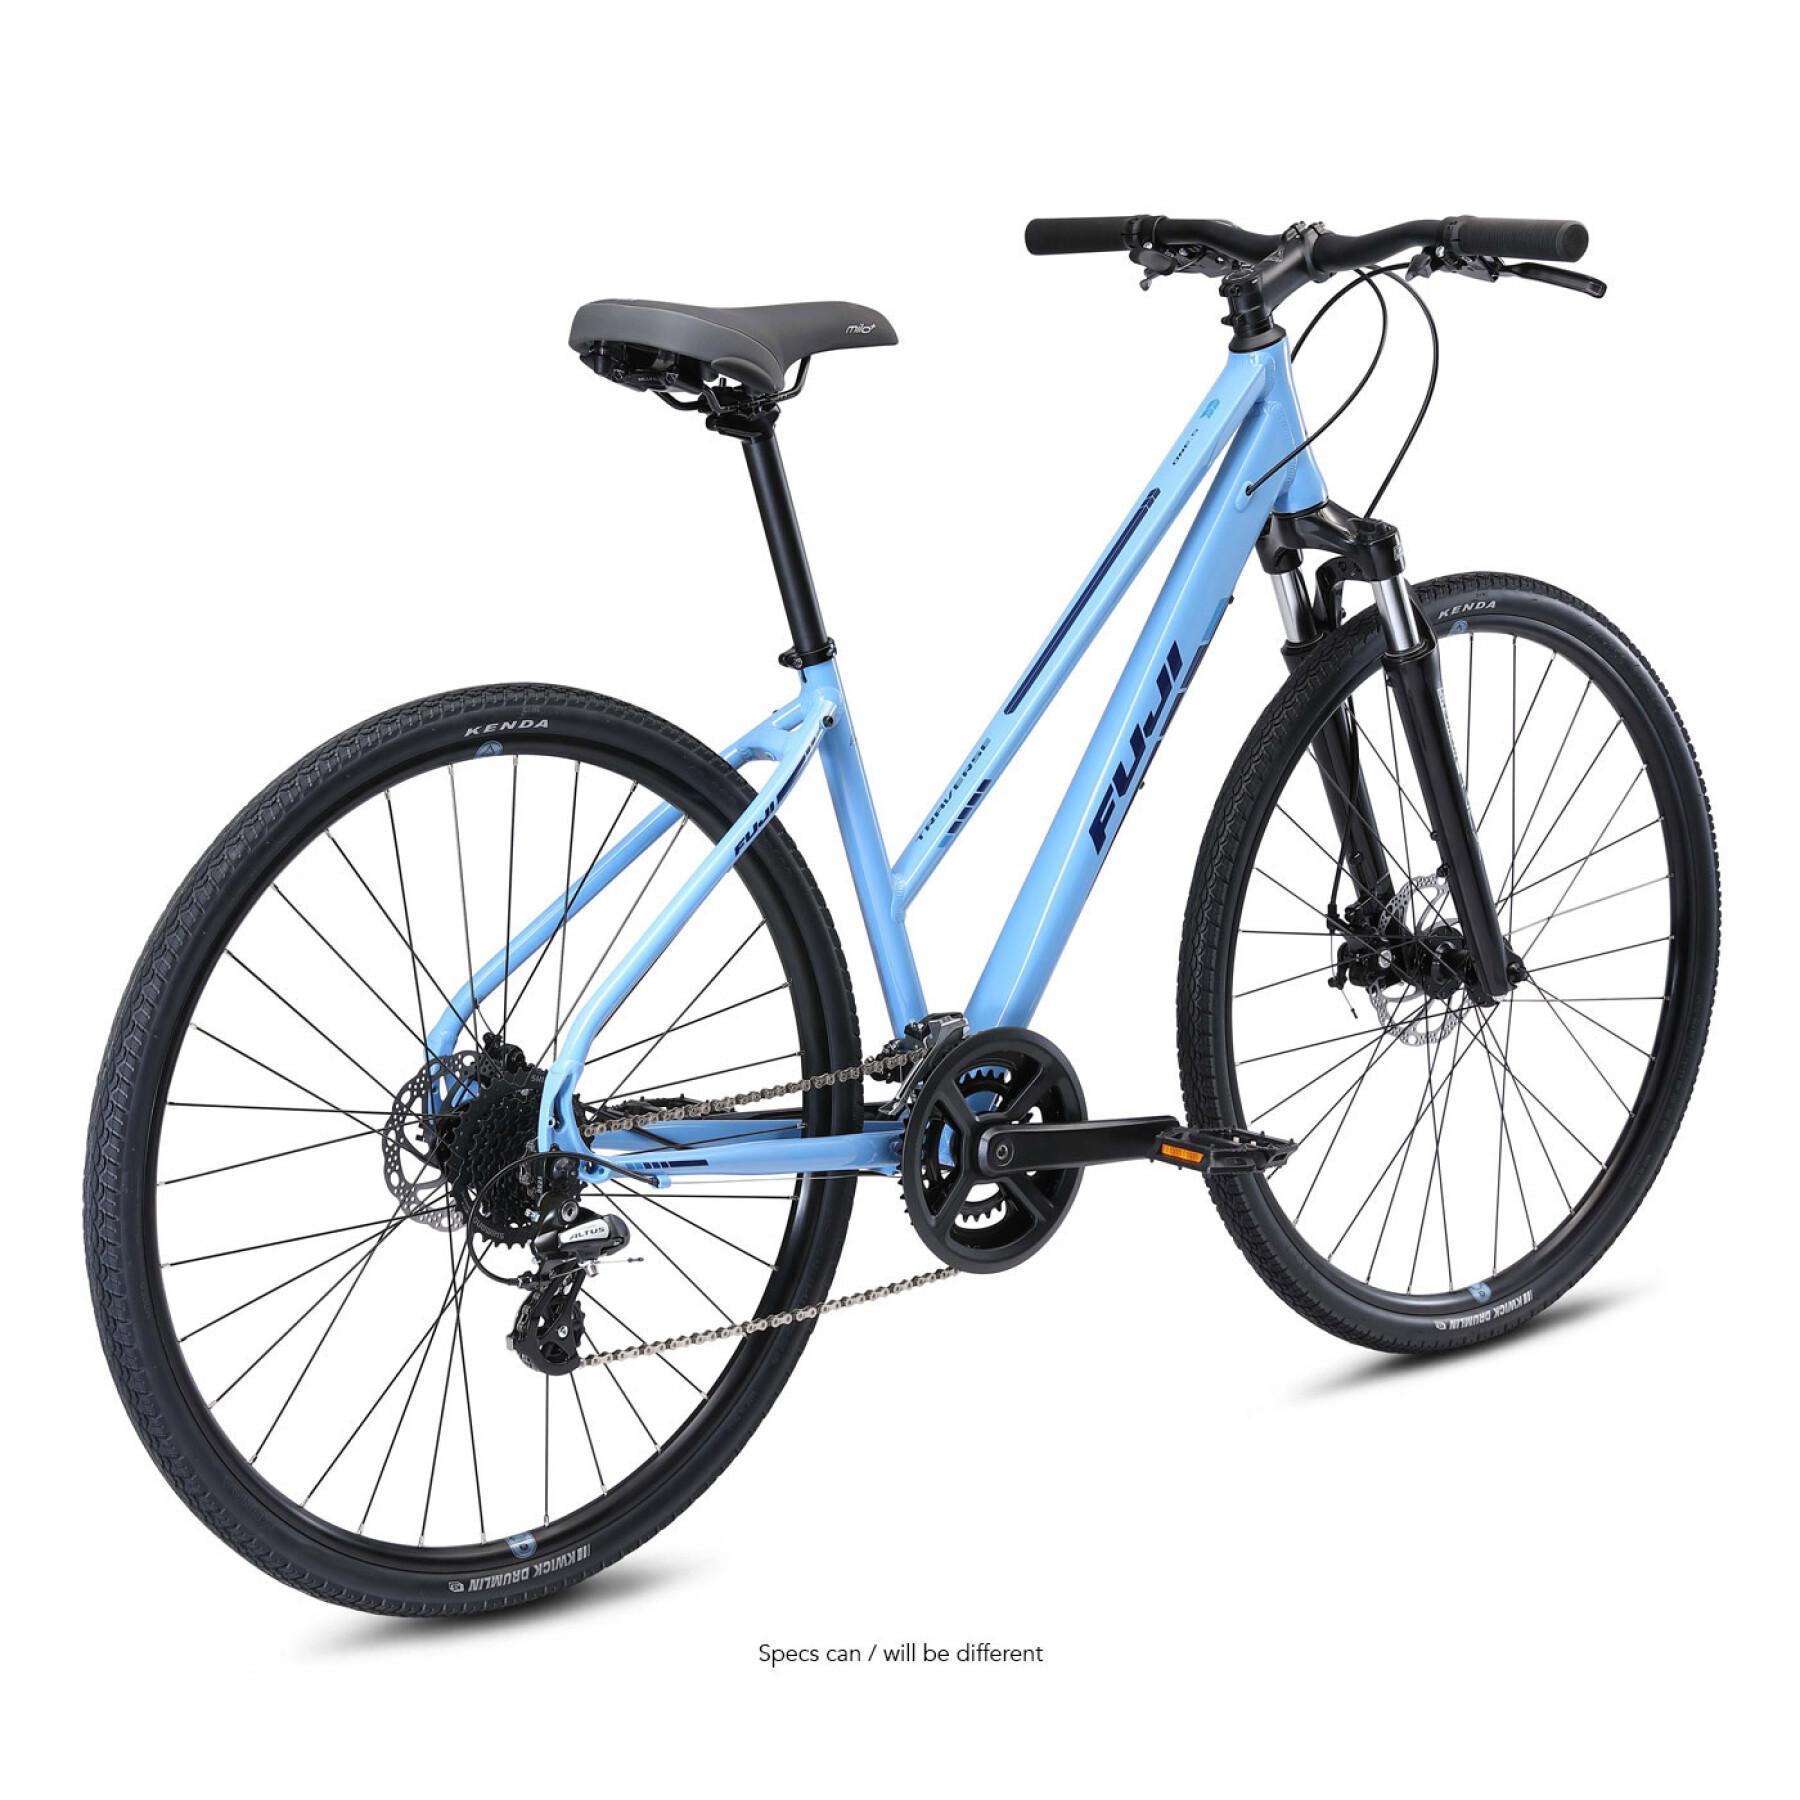 Bicicleta Fuji Traverse 1.5 Disc ST 17 2022 B-Merchandise